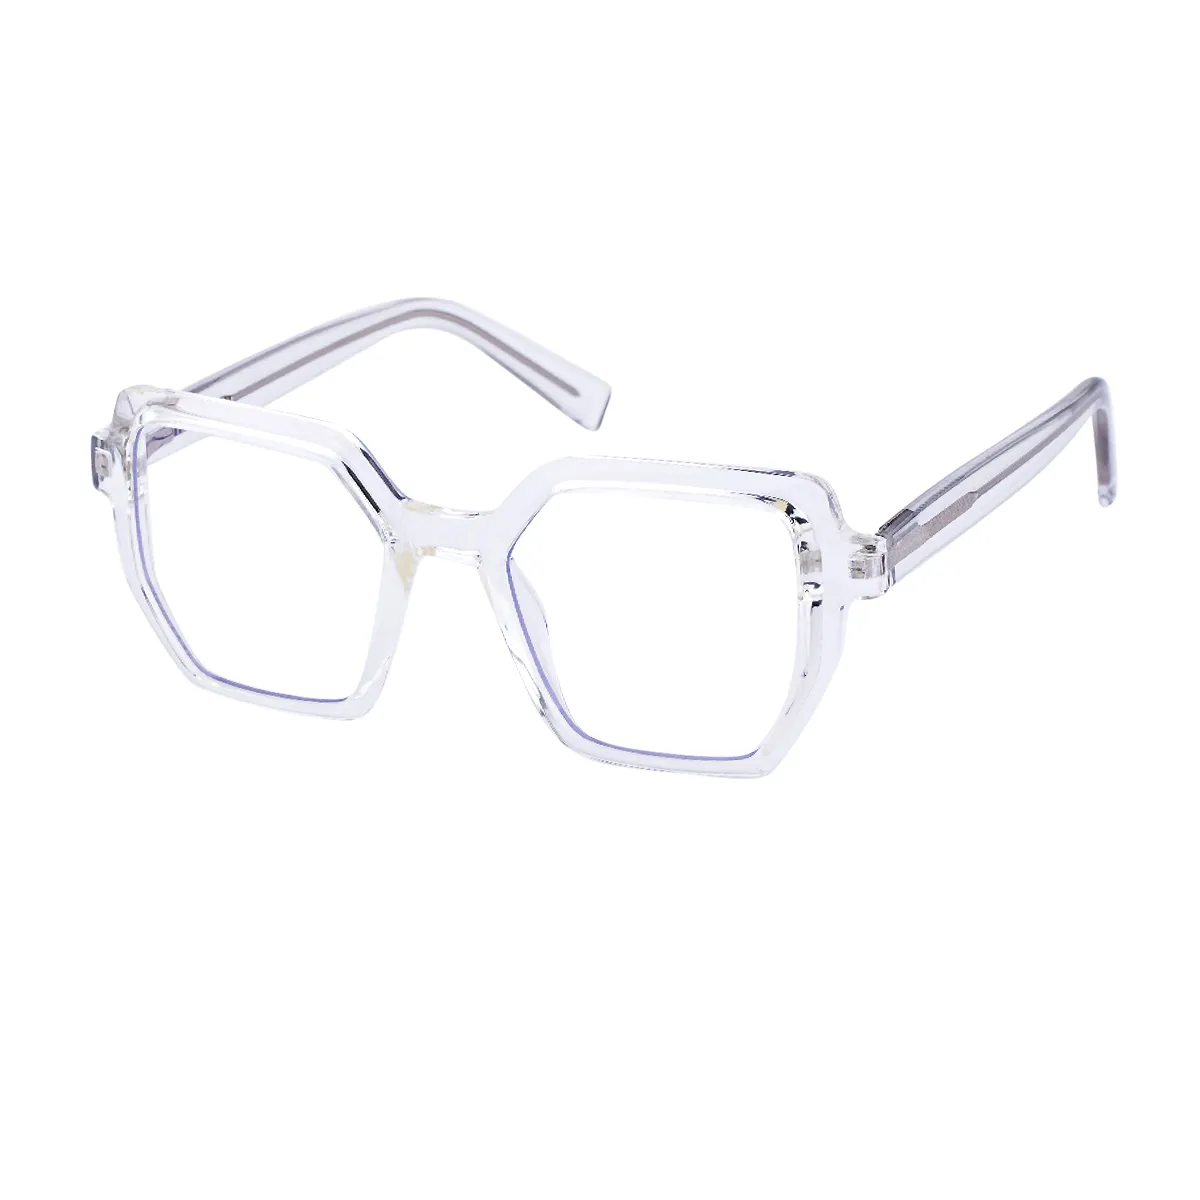 Gemma - Geometric Translucent Glasses for Women - EFE